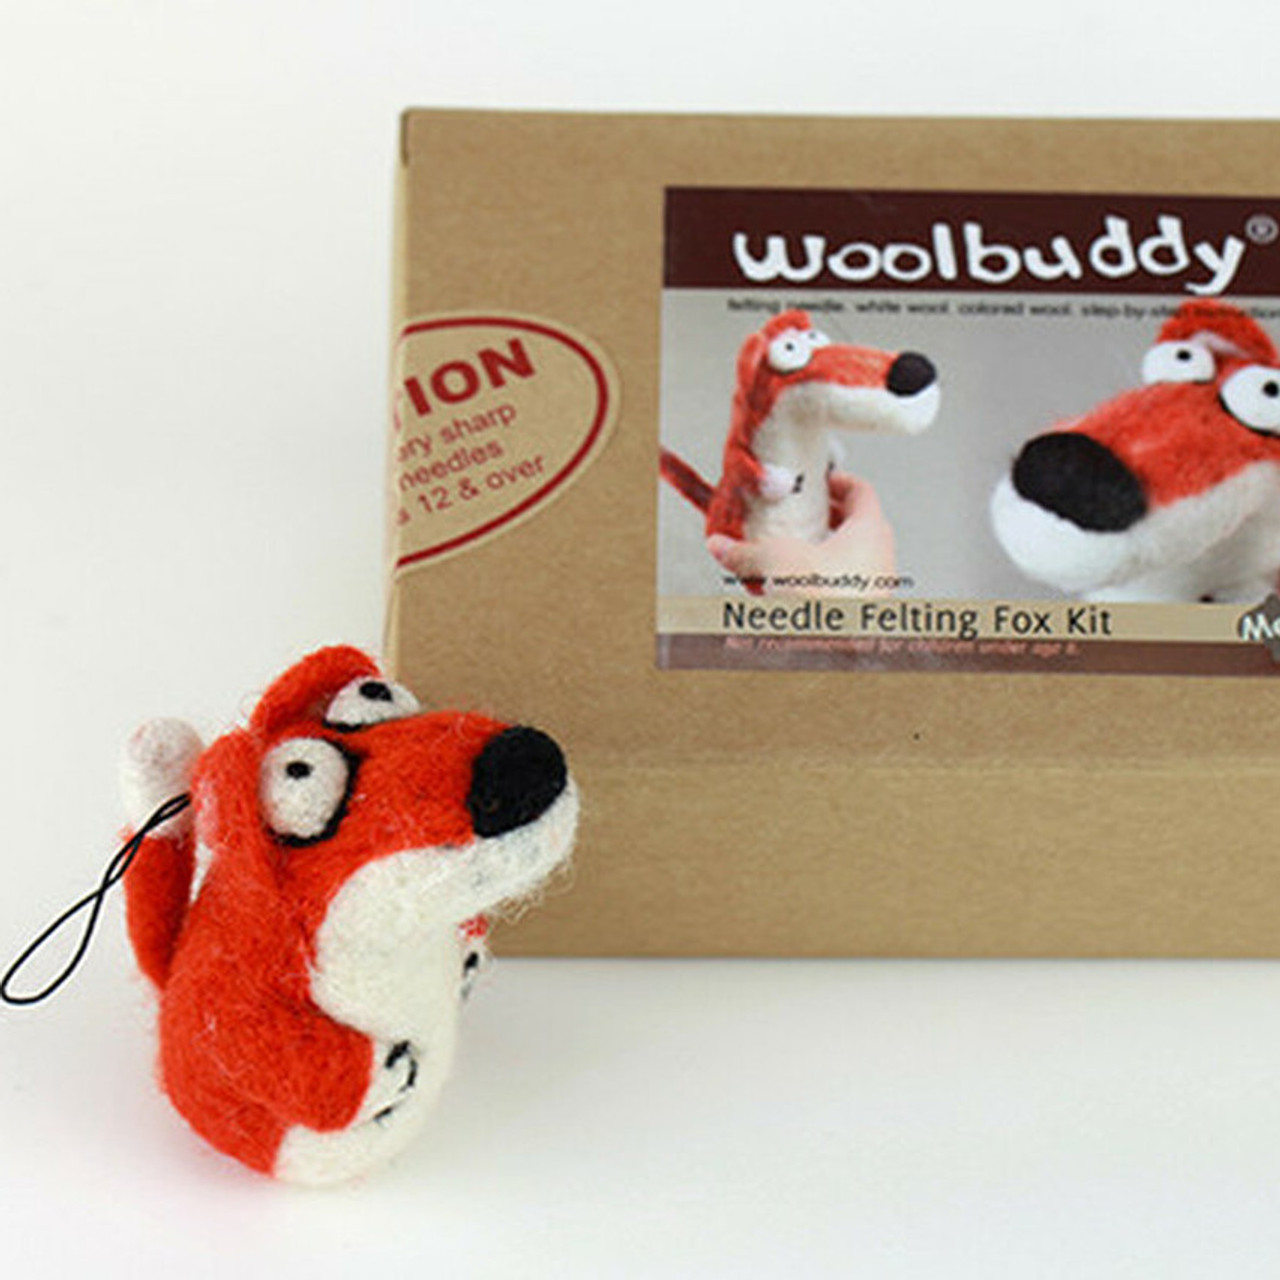 Woolbuddy Needle Felting Kit Fox